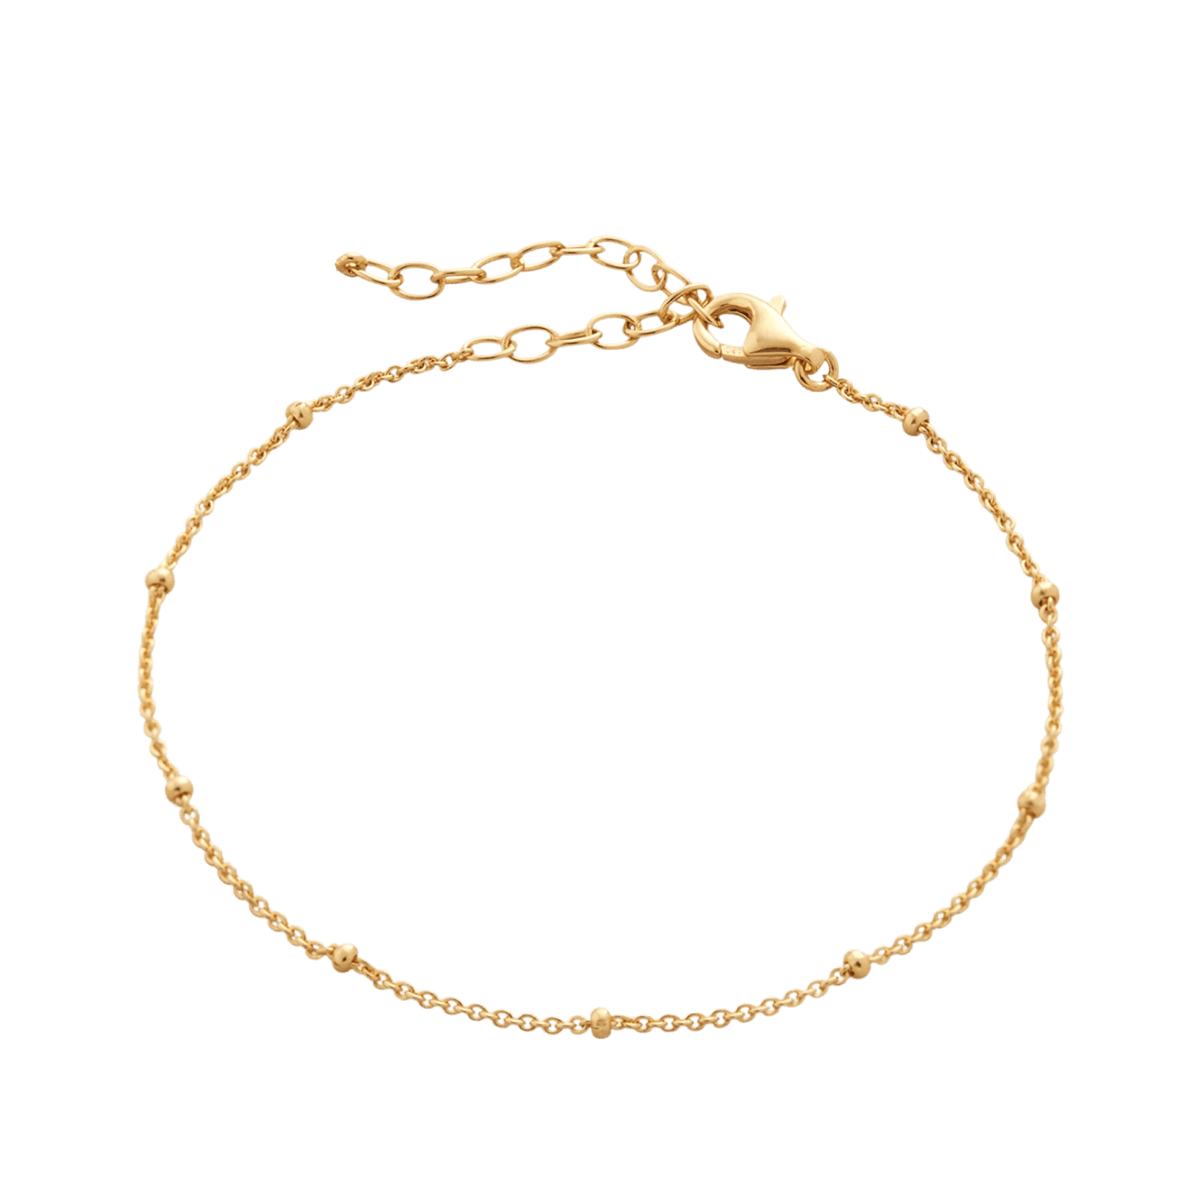 Bead Curb Chain Sterling Silver Adjustable Bracelet - Spero London